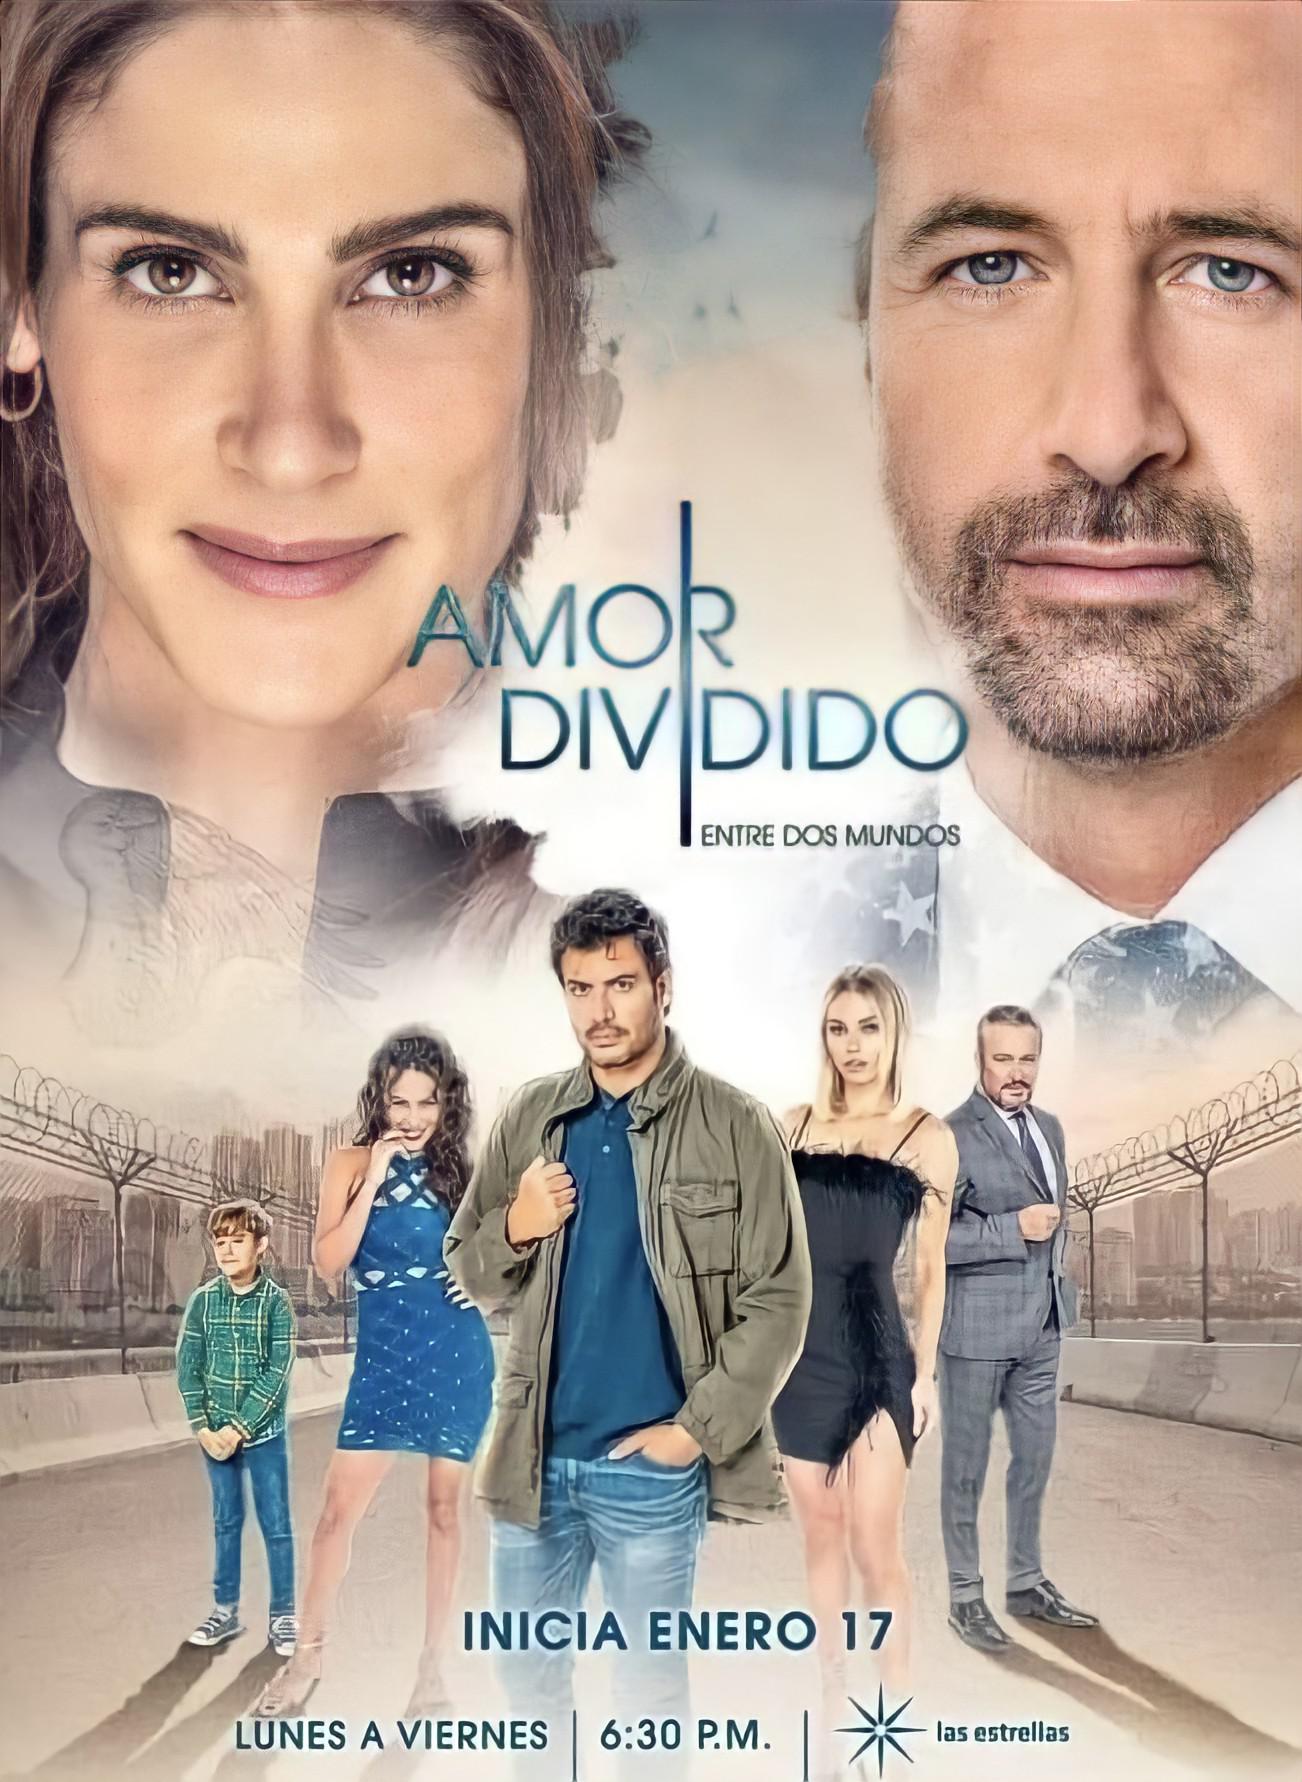 TV ratings for Amor Dividido in Argentina. Las Estrellas TV series